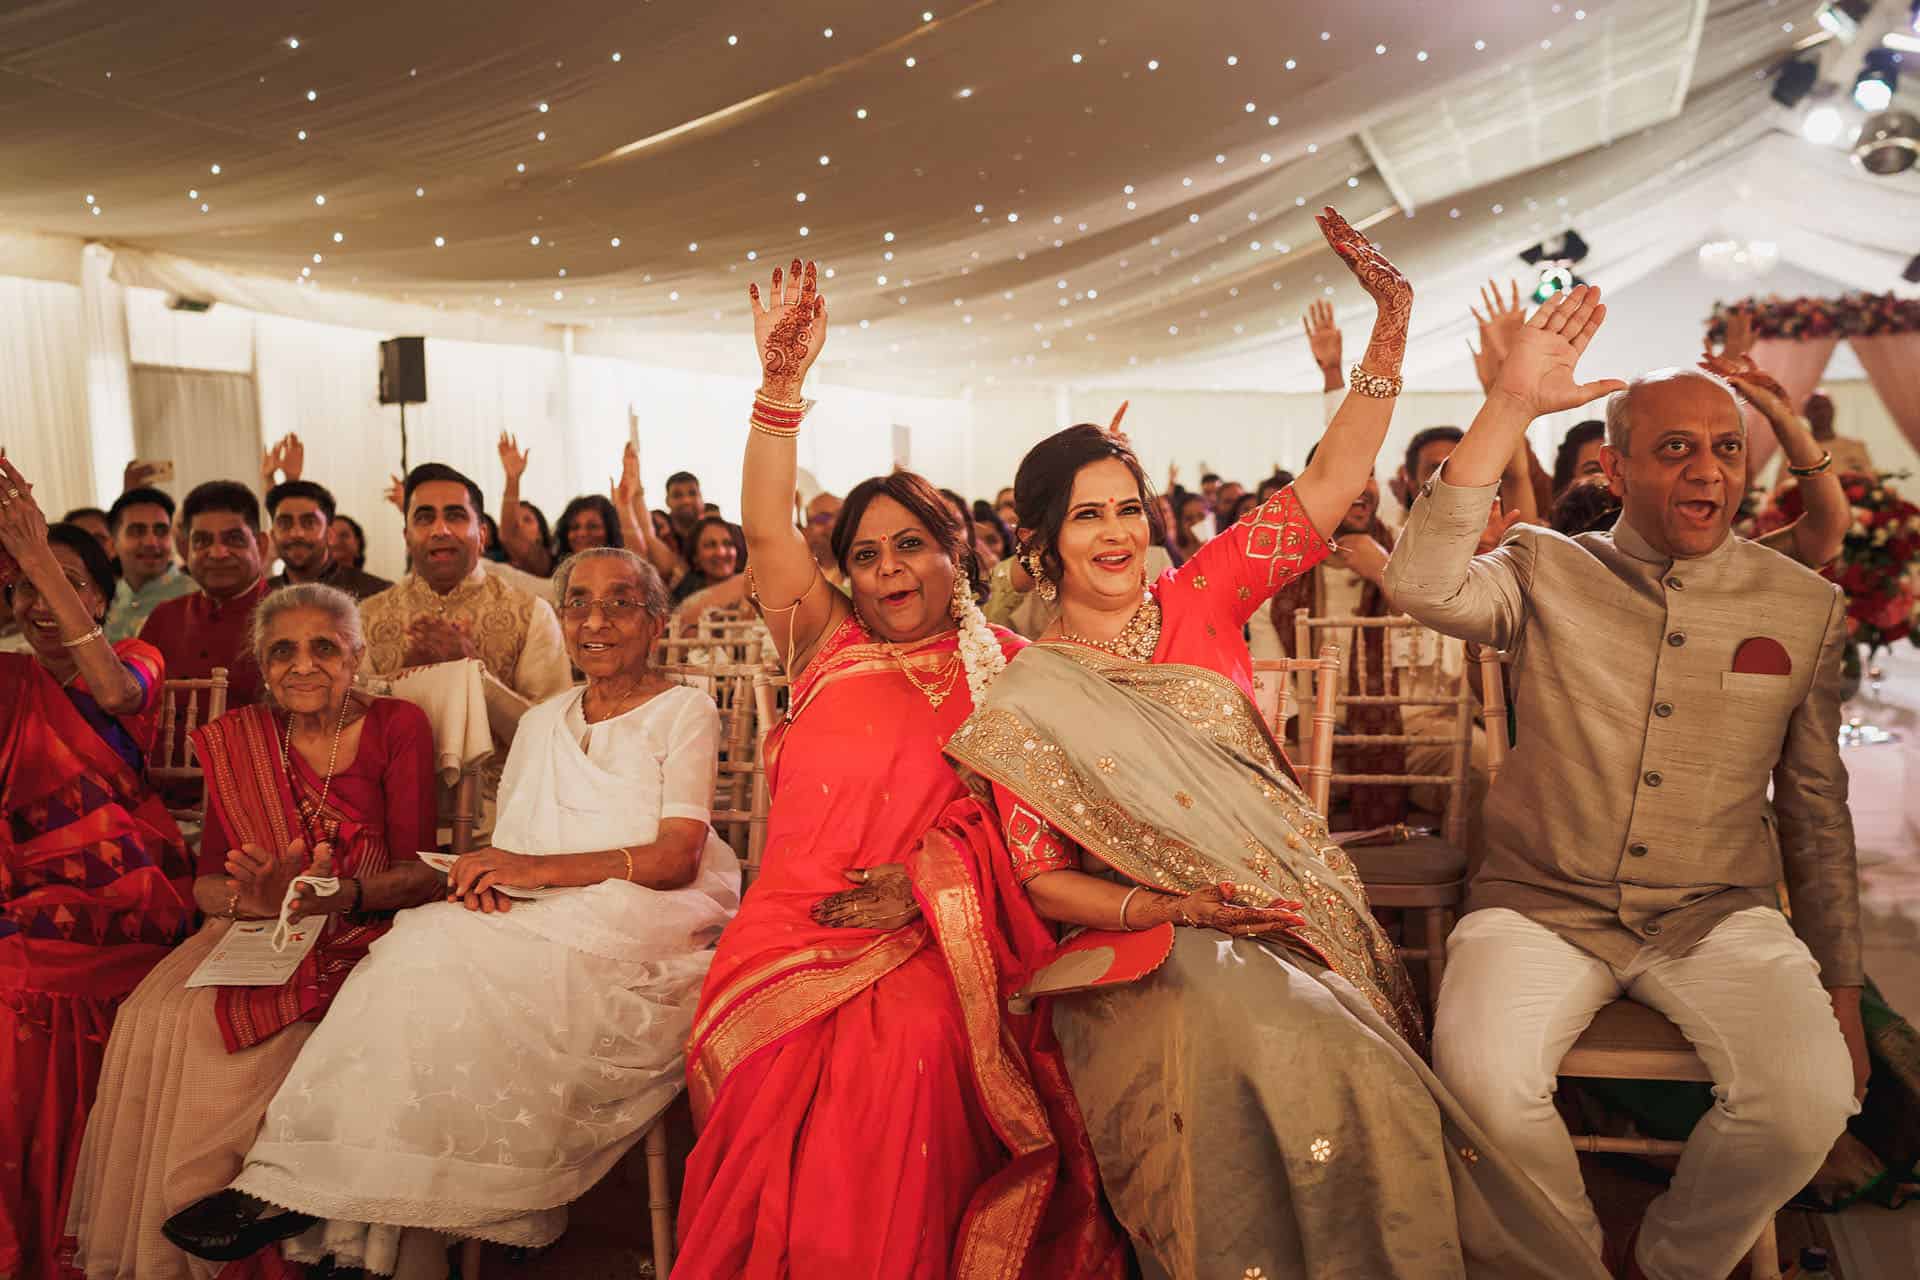 ditton manor hindu wedding photos